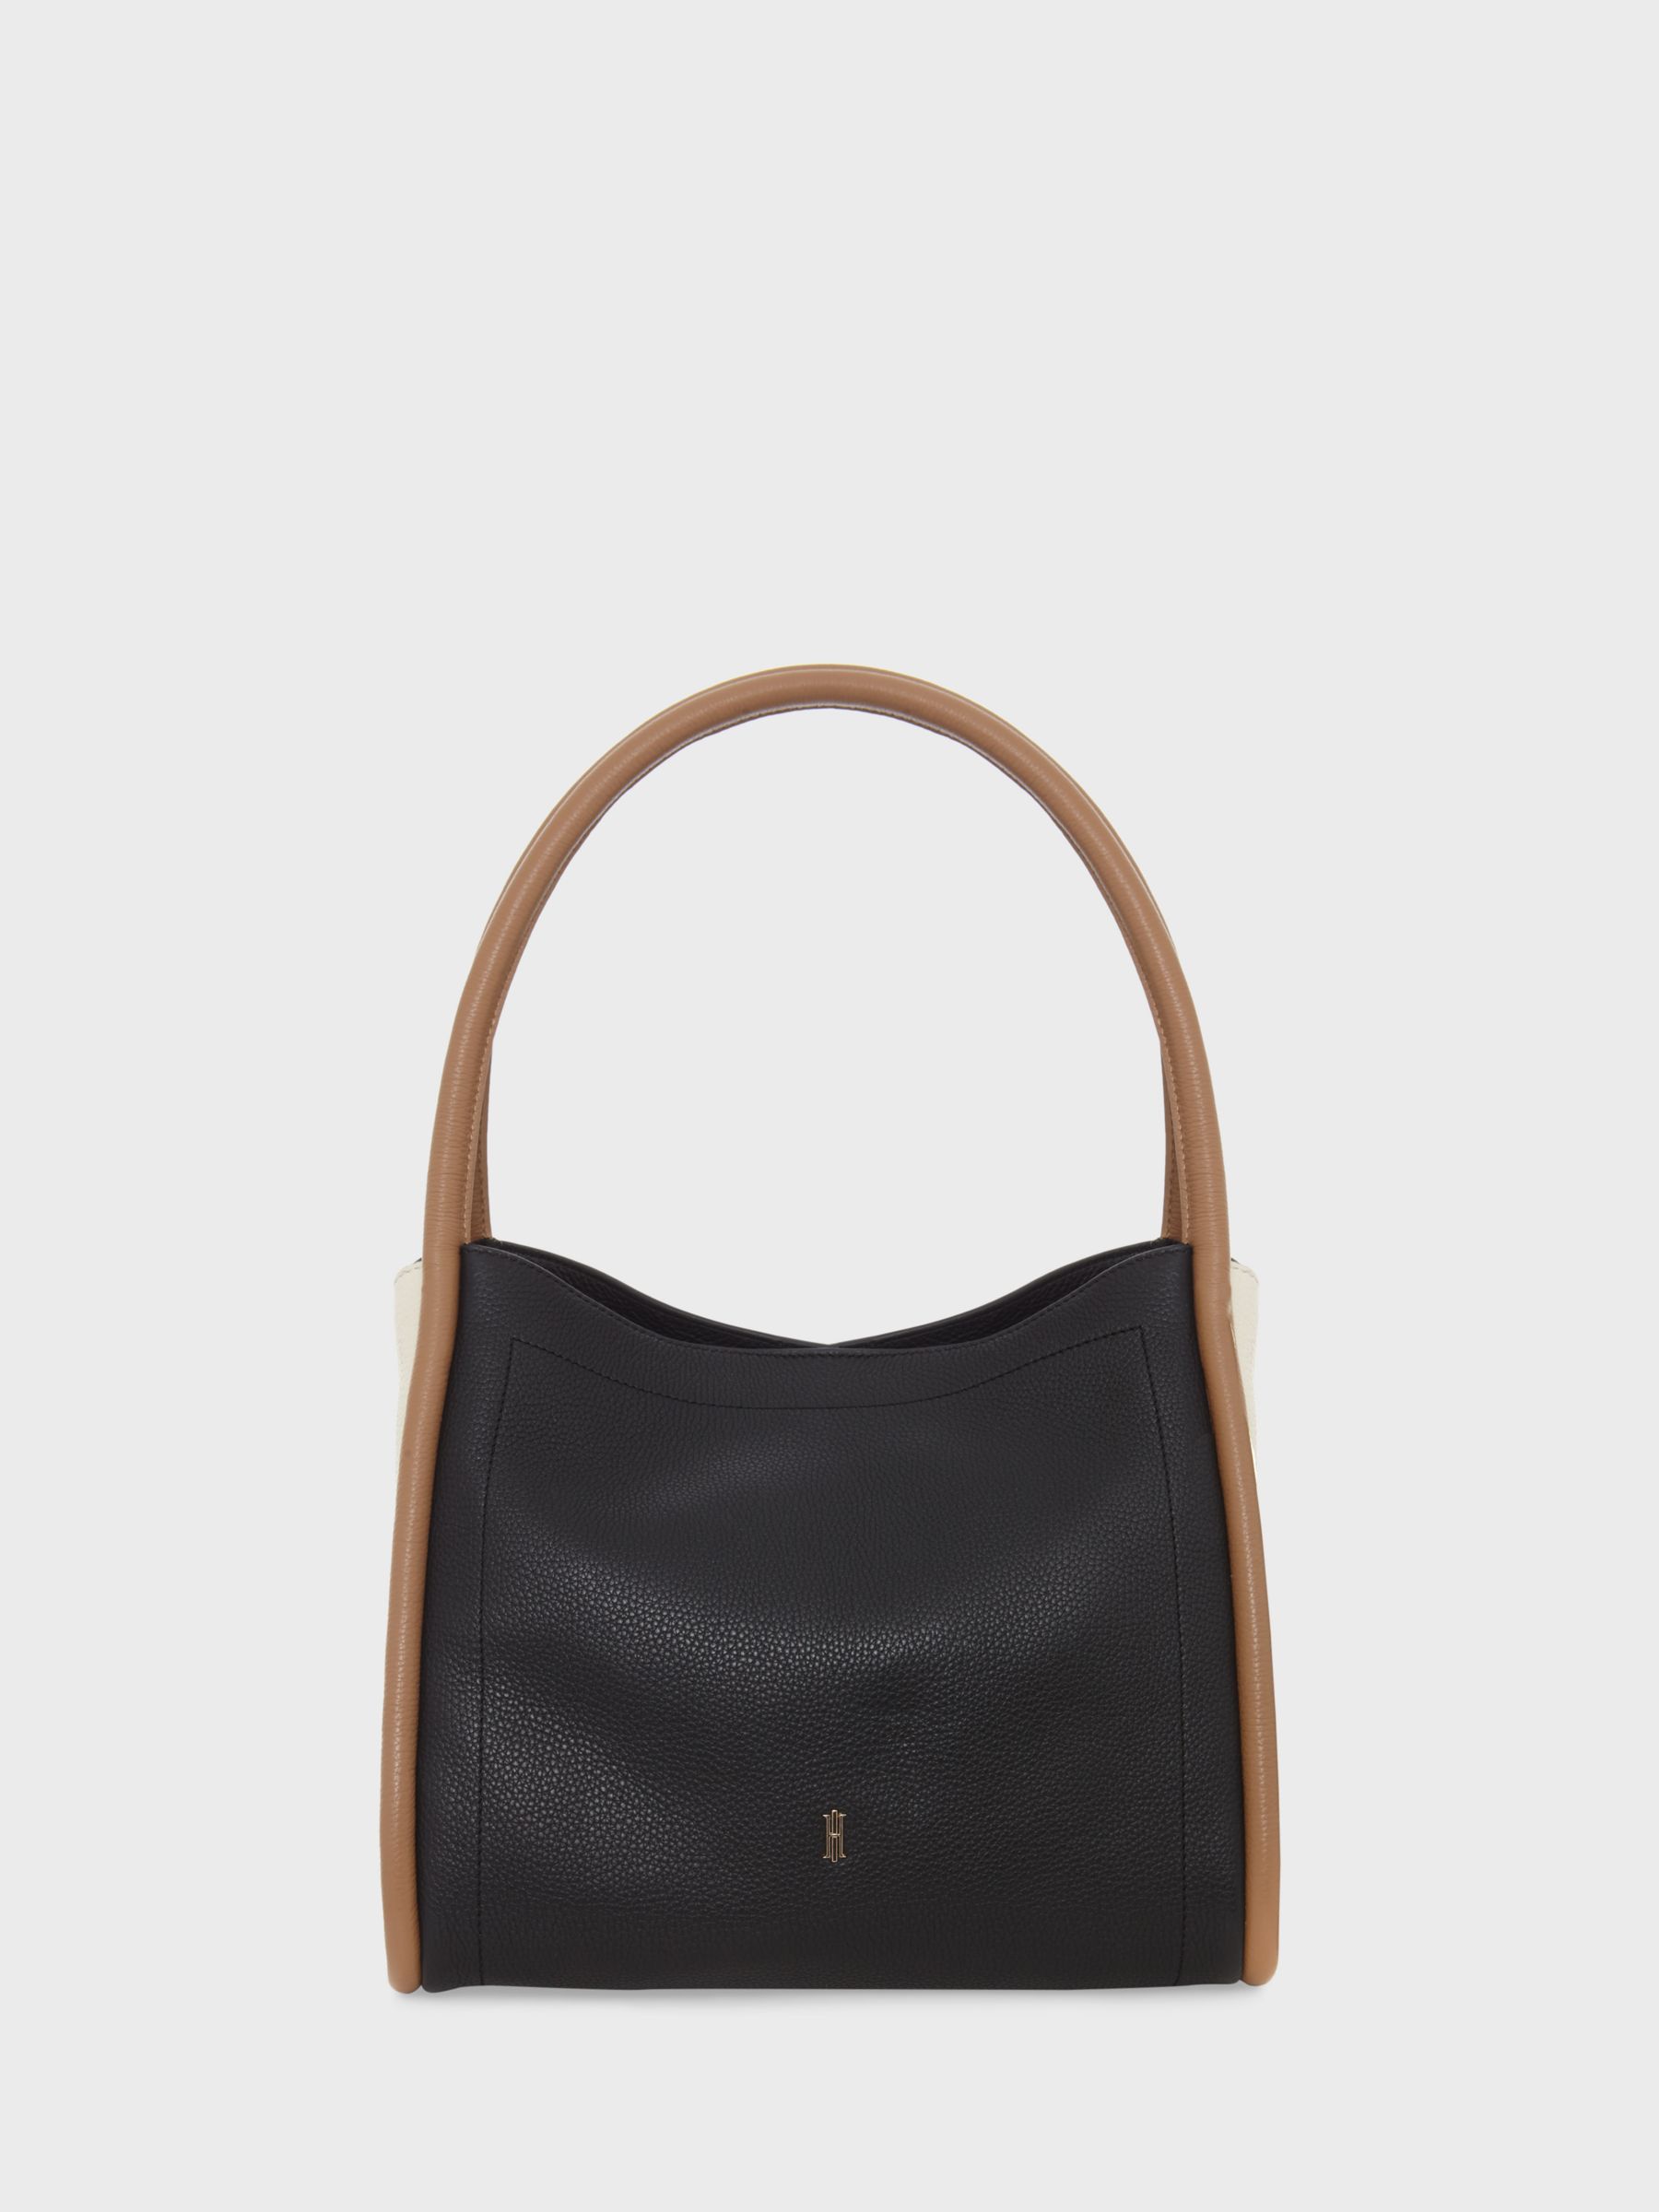 Hobbs Hurlingham Leather Tote Bag, Black/Multi, One Size